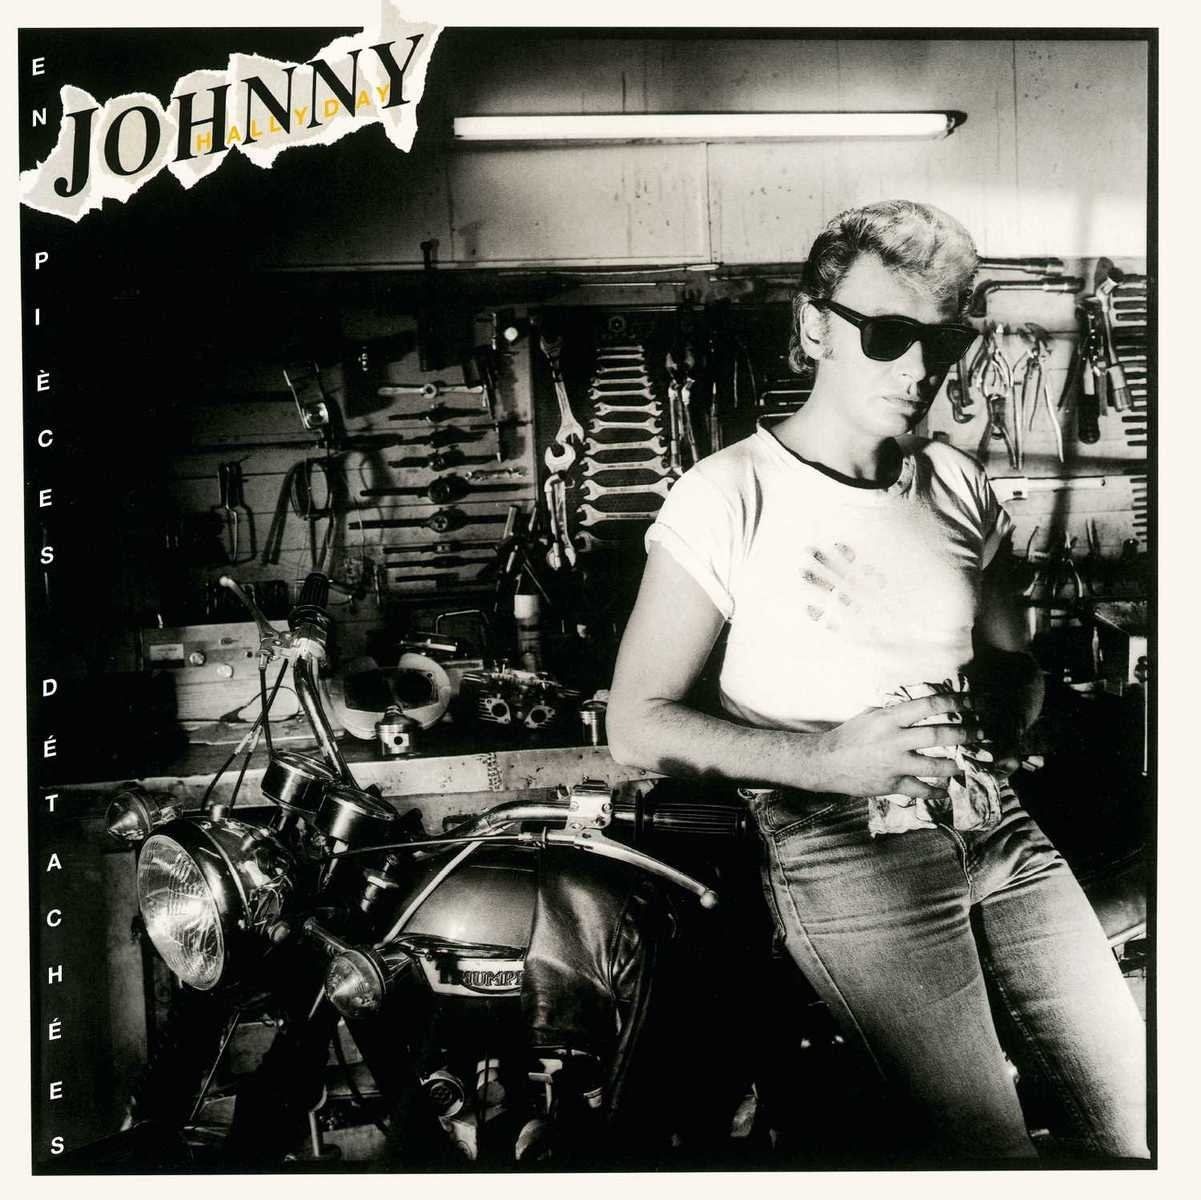 Best Of - CD – Store Johnny Hallyday